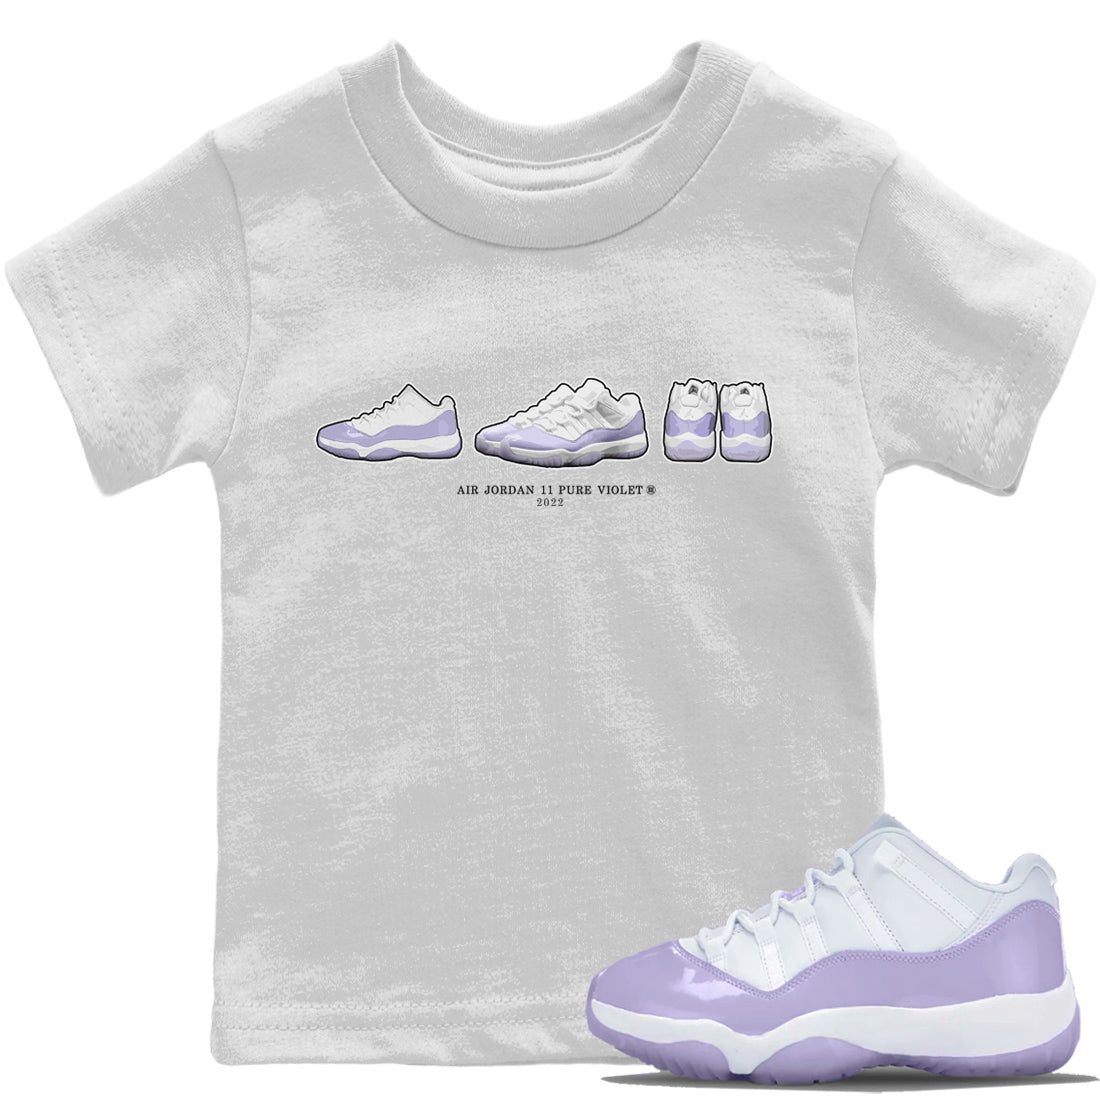 Jordan 11 Pure Violet Sneaker Match Tees Air Jordan 11 Prelude Sneaker Tees Jordan 11 Pure Violet Sneaker Release Tees Kids Shirts